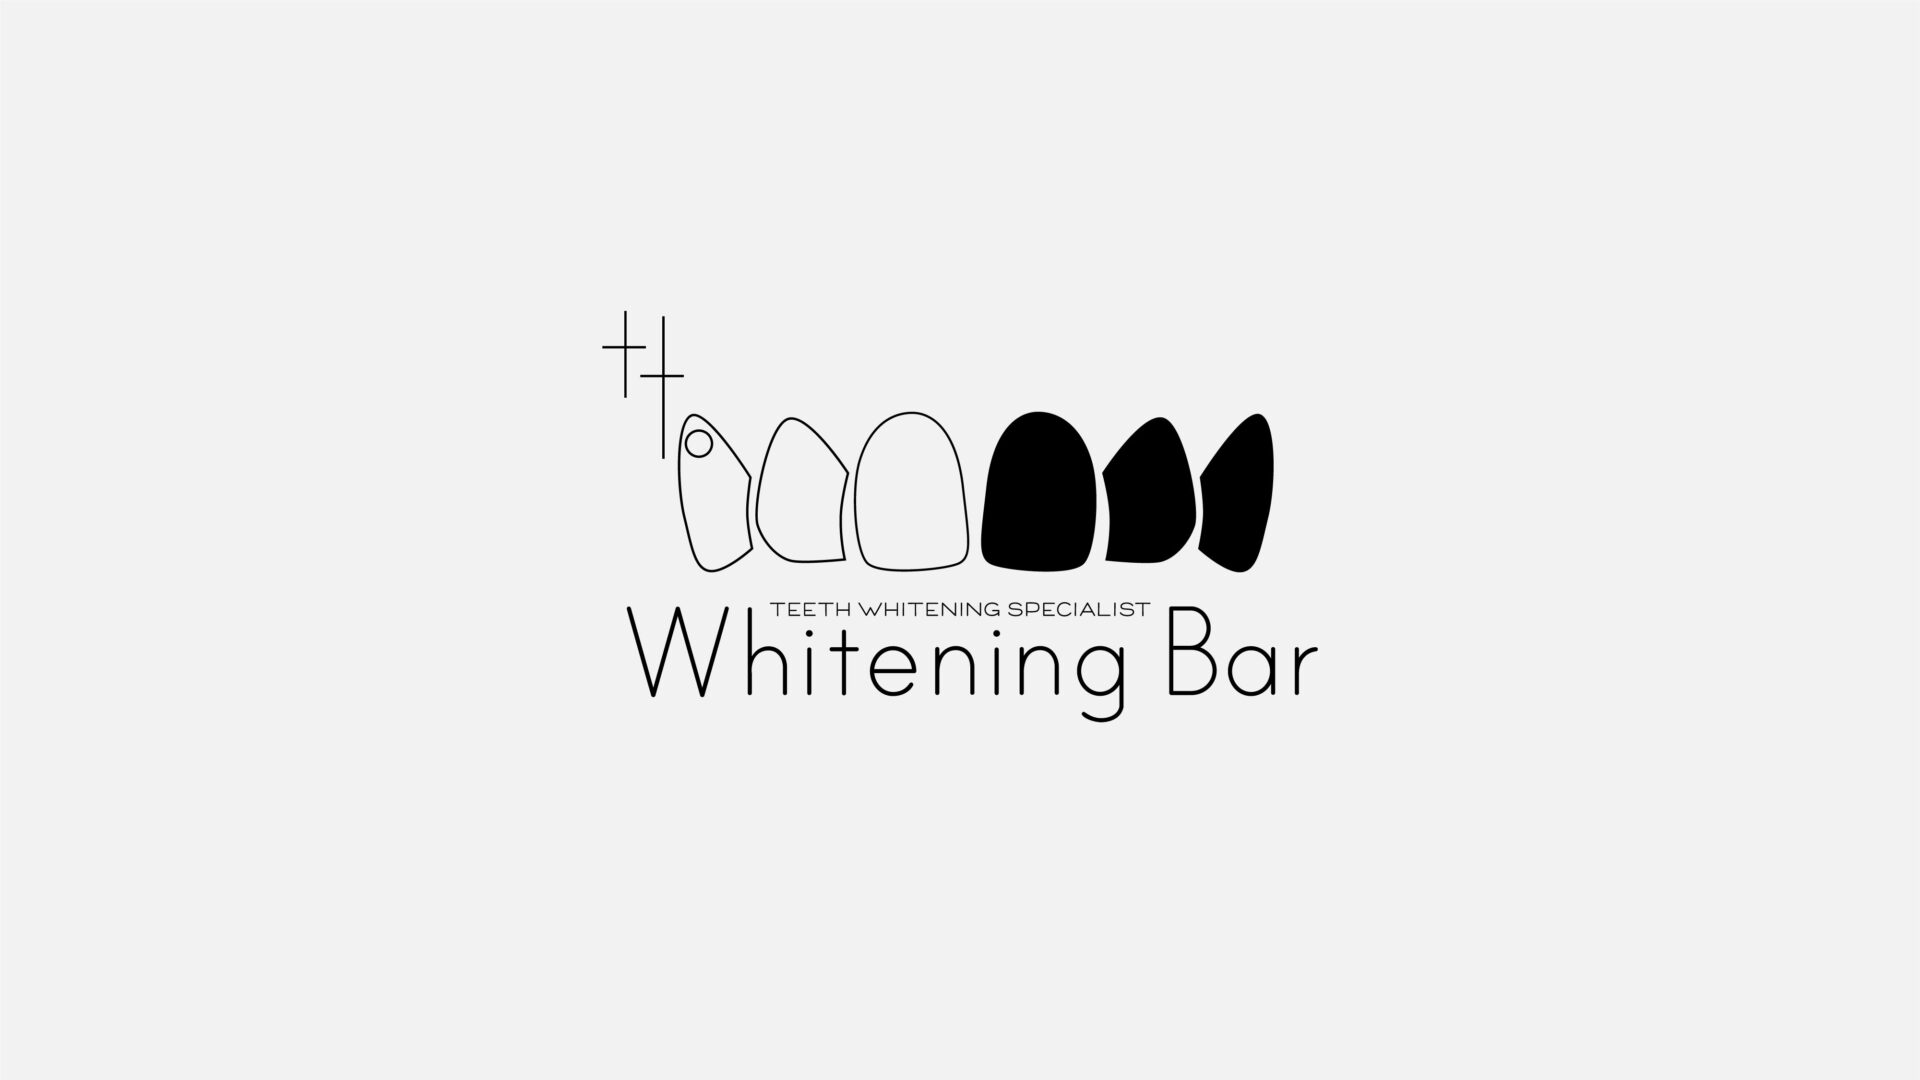 「WHITENING BAR」のサムネイル画像